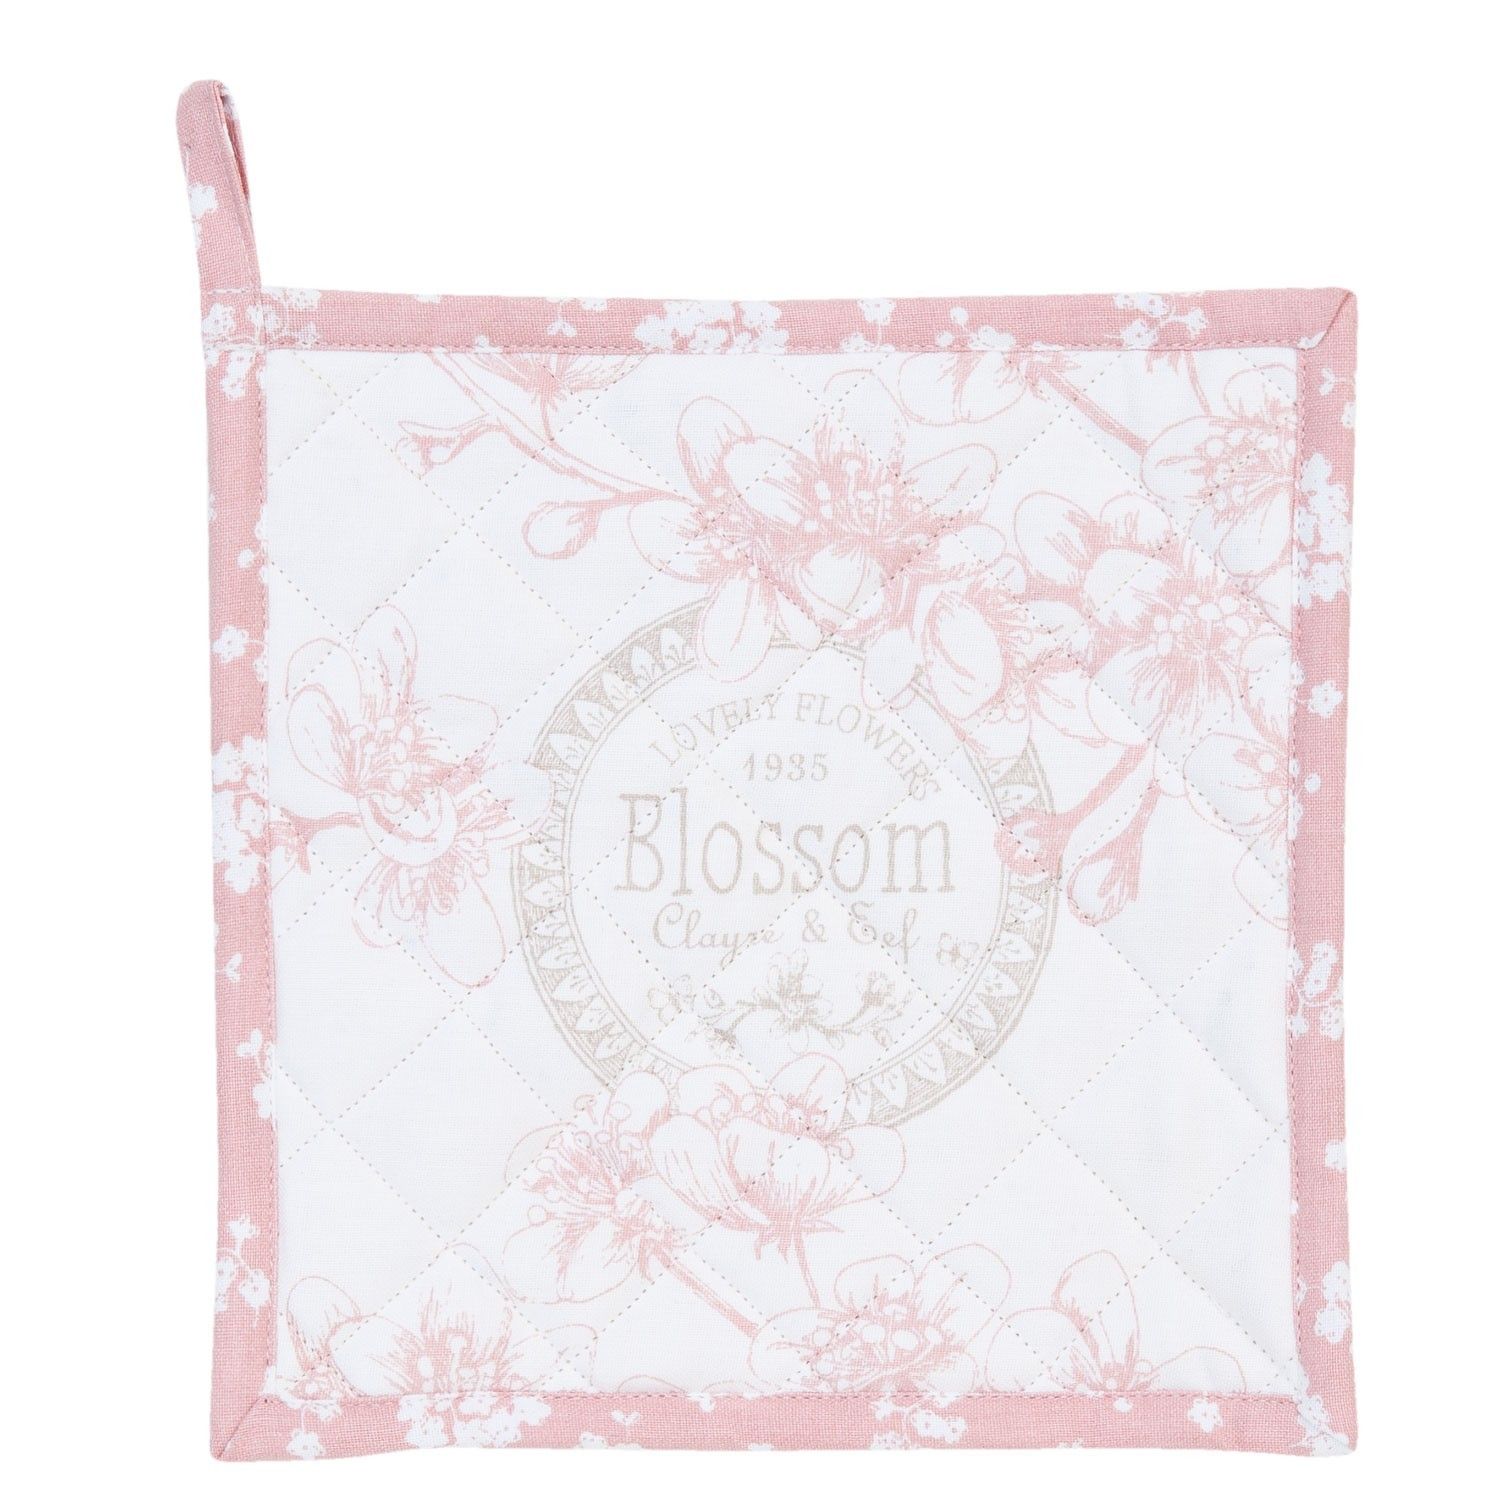 Chňapka - podložka Lovely Blossom Flowers - 20*20 cm Clayre & Eef - LaHome - vintage dekorace